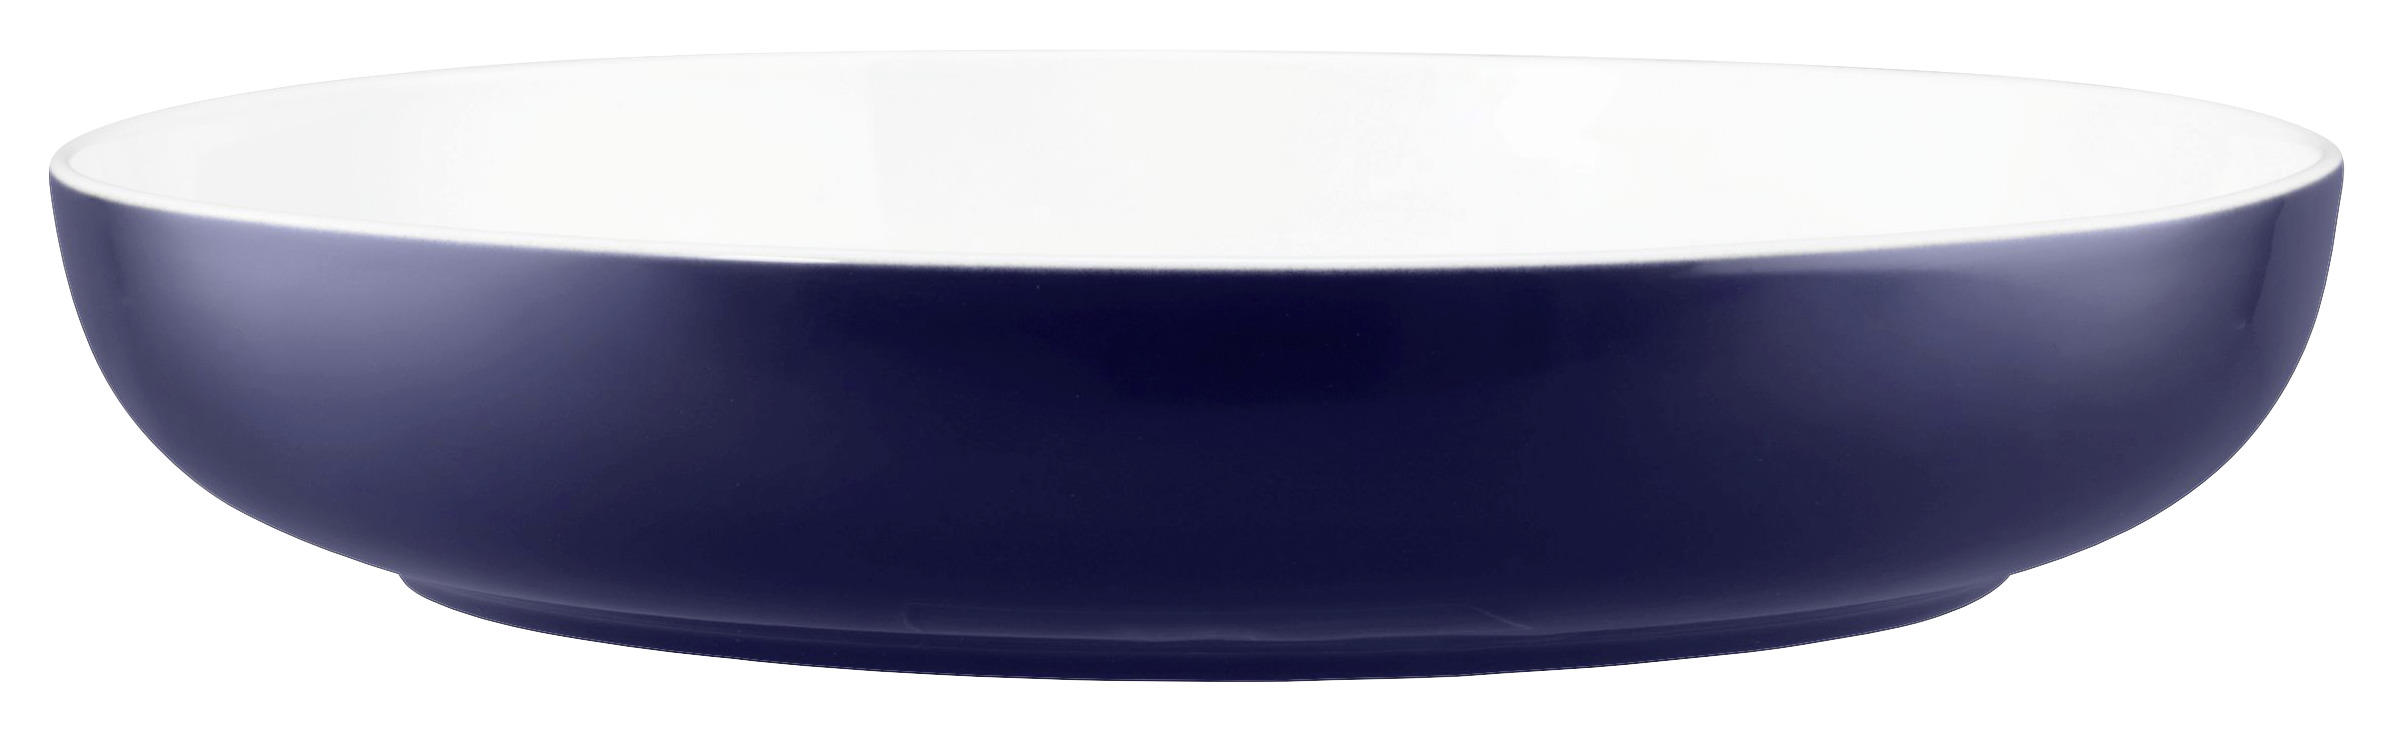 SCHÜSSEL Keramik Porzellan  - Weiß/Dunkelblau, Basics, Keramik (28cm) - Seltmann Weiden